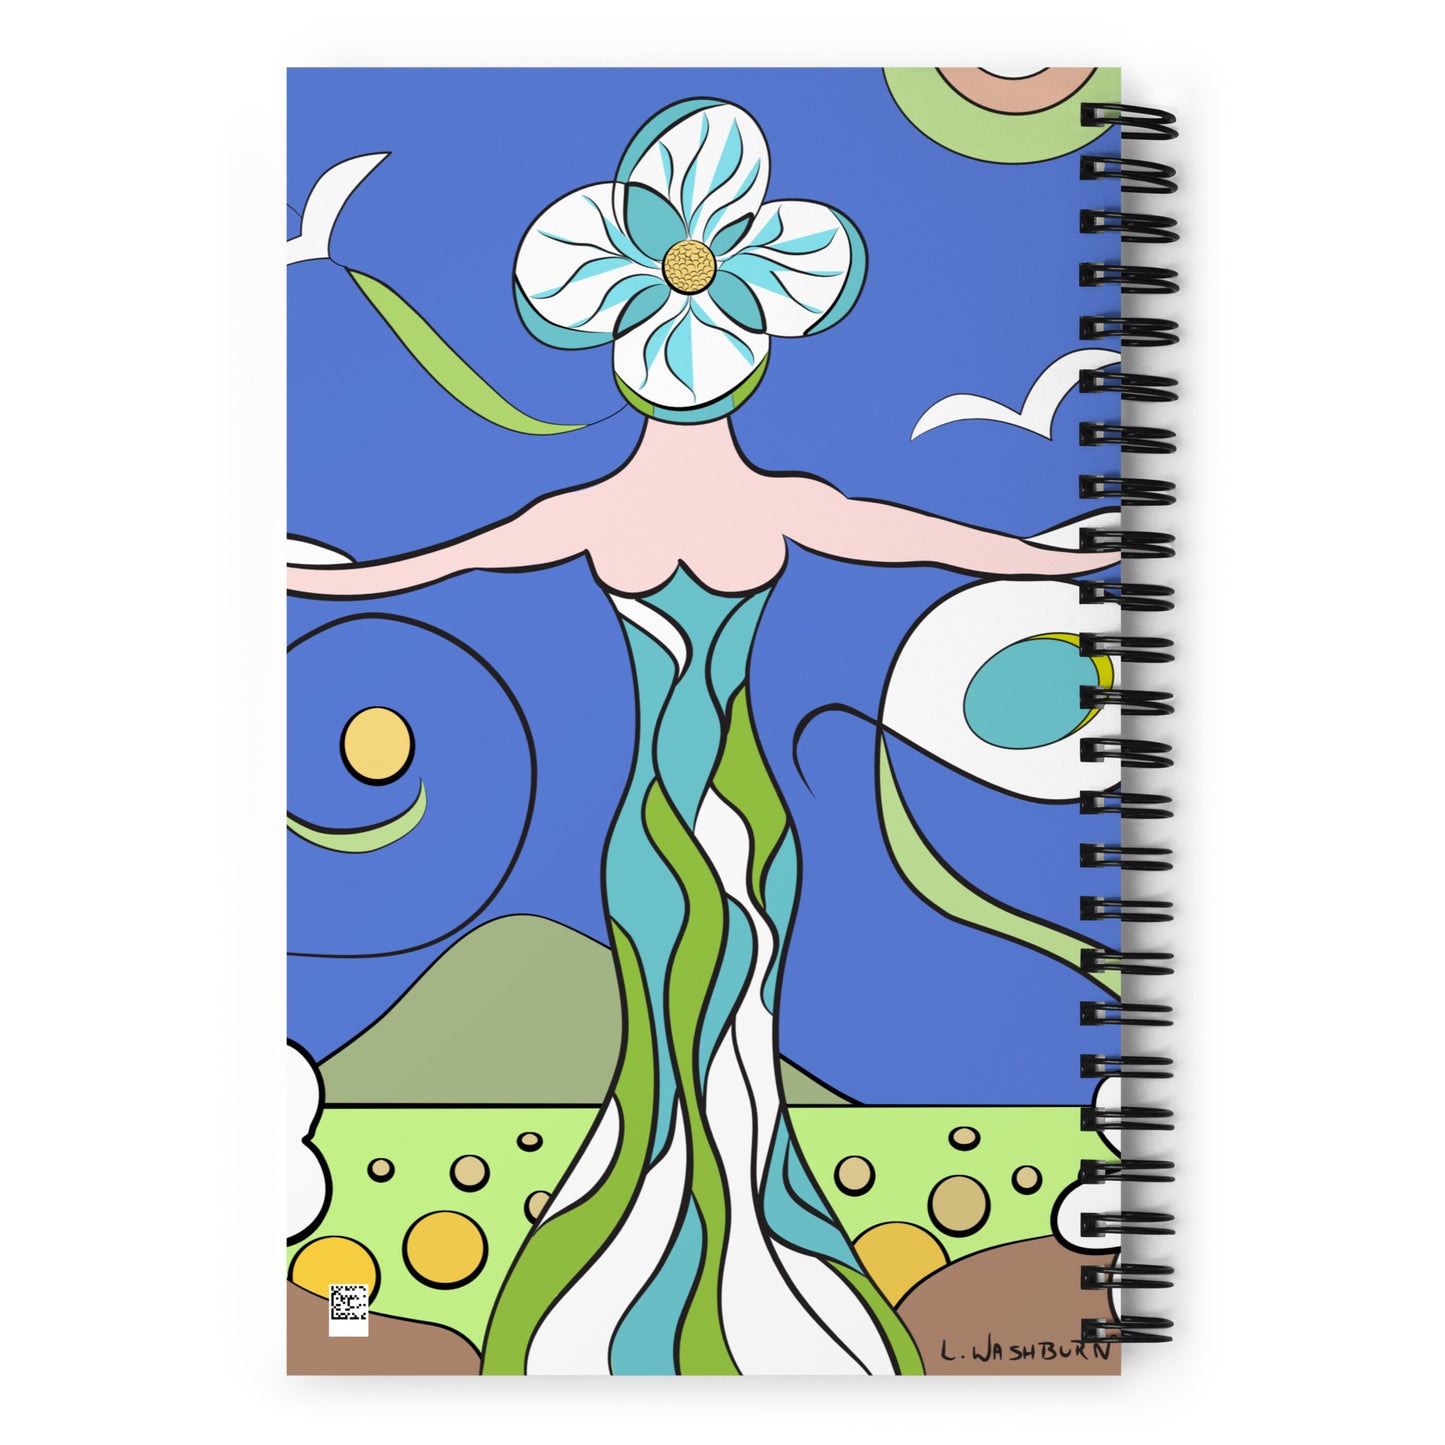 Spiral notebook misteria blue